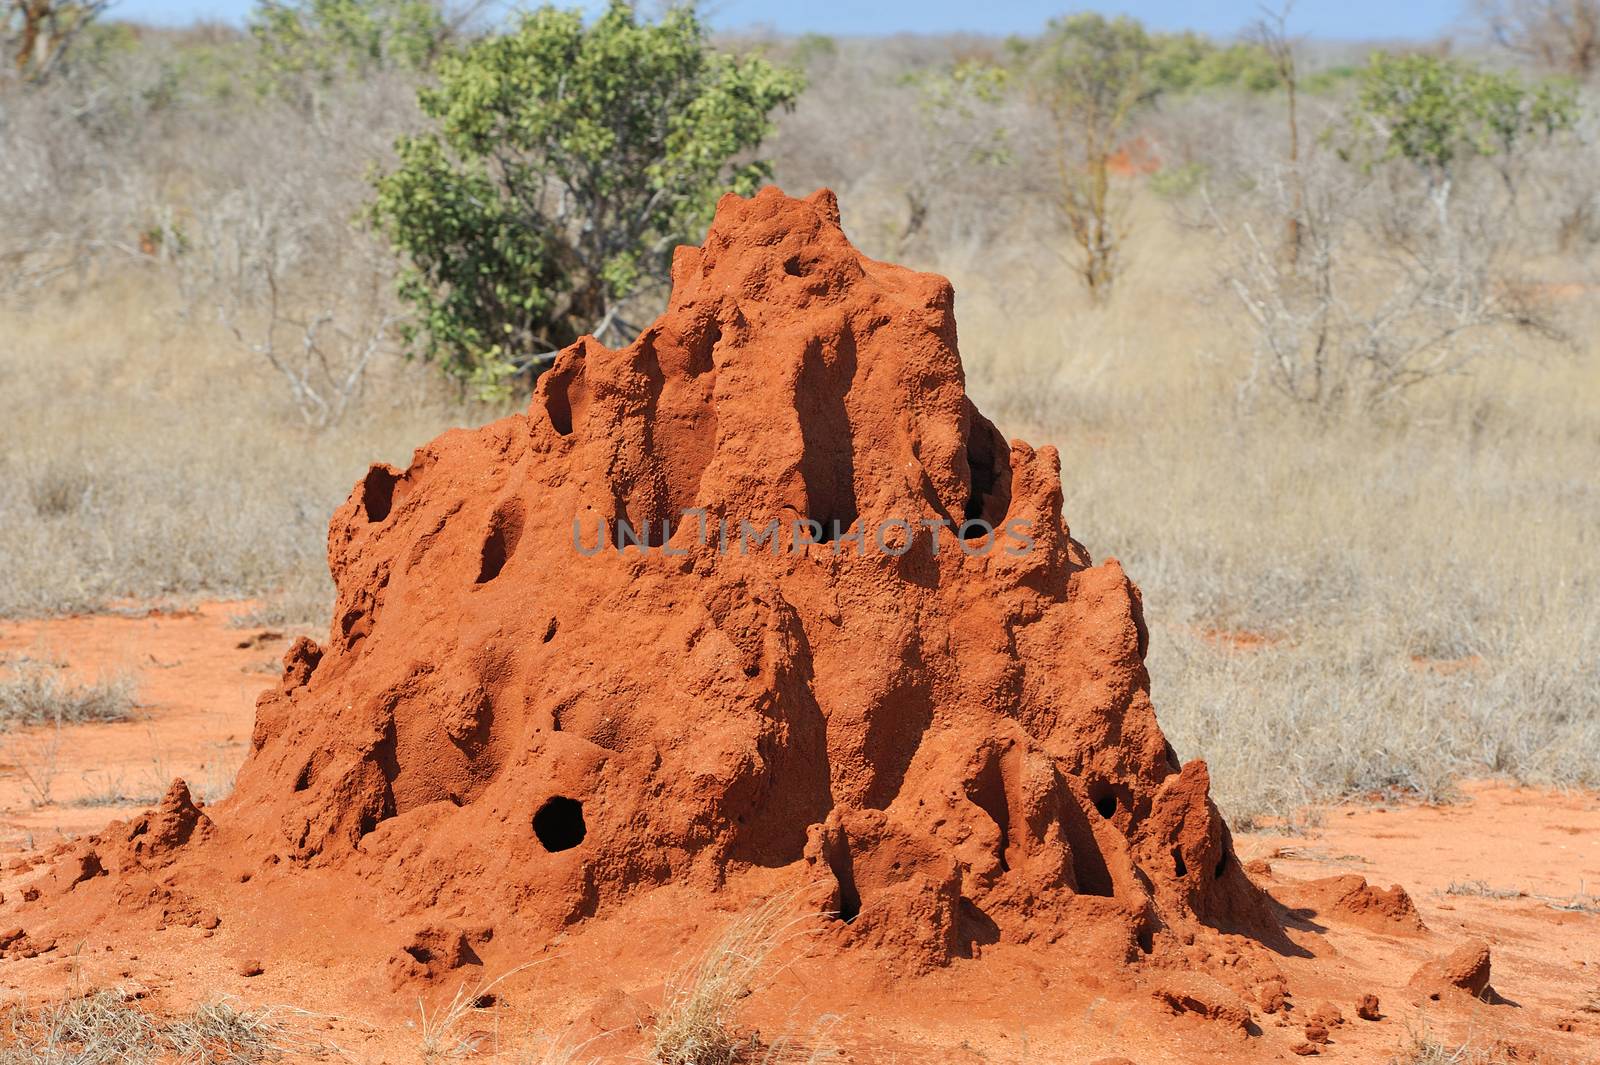 Termite Mound by byrdyak